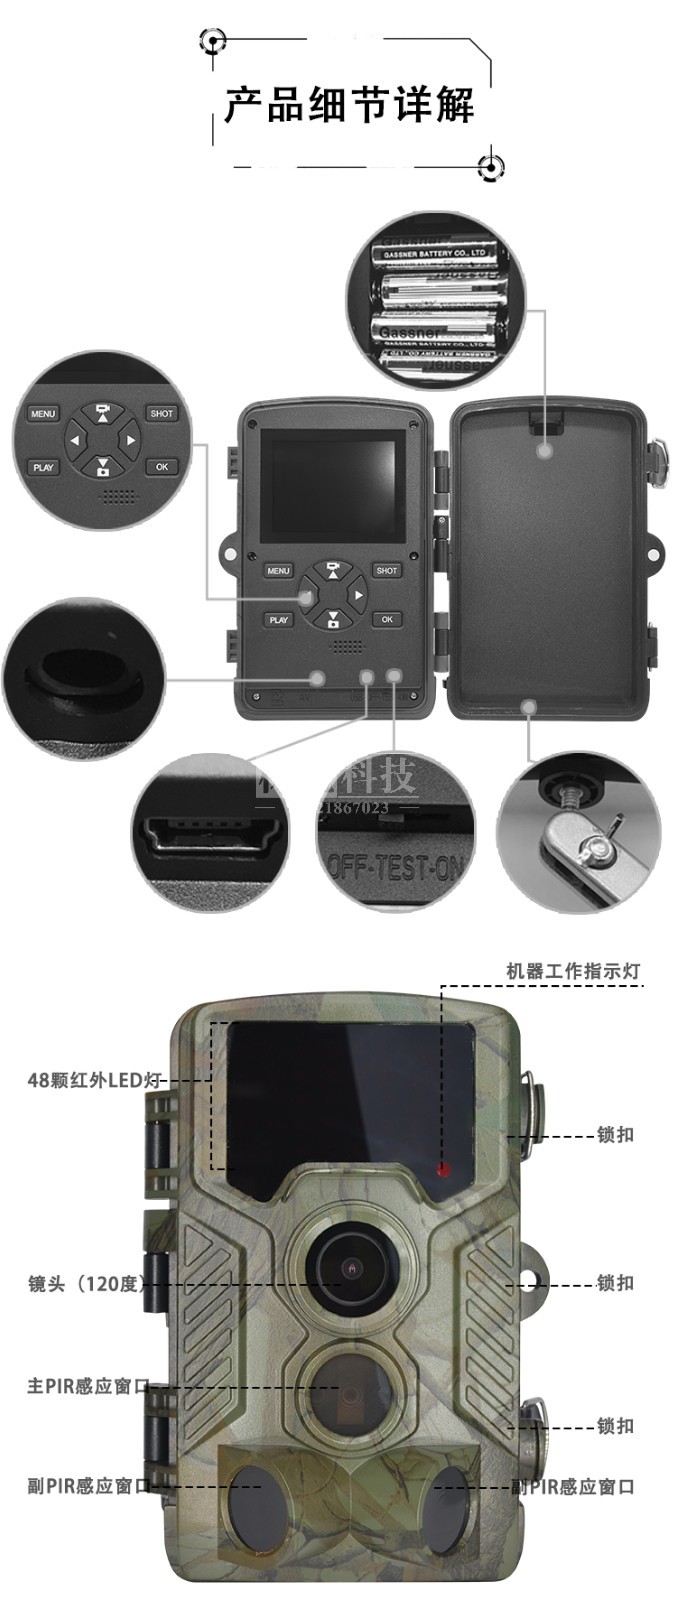 H881 PLUS红外相机 产品细节详解.jpg